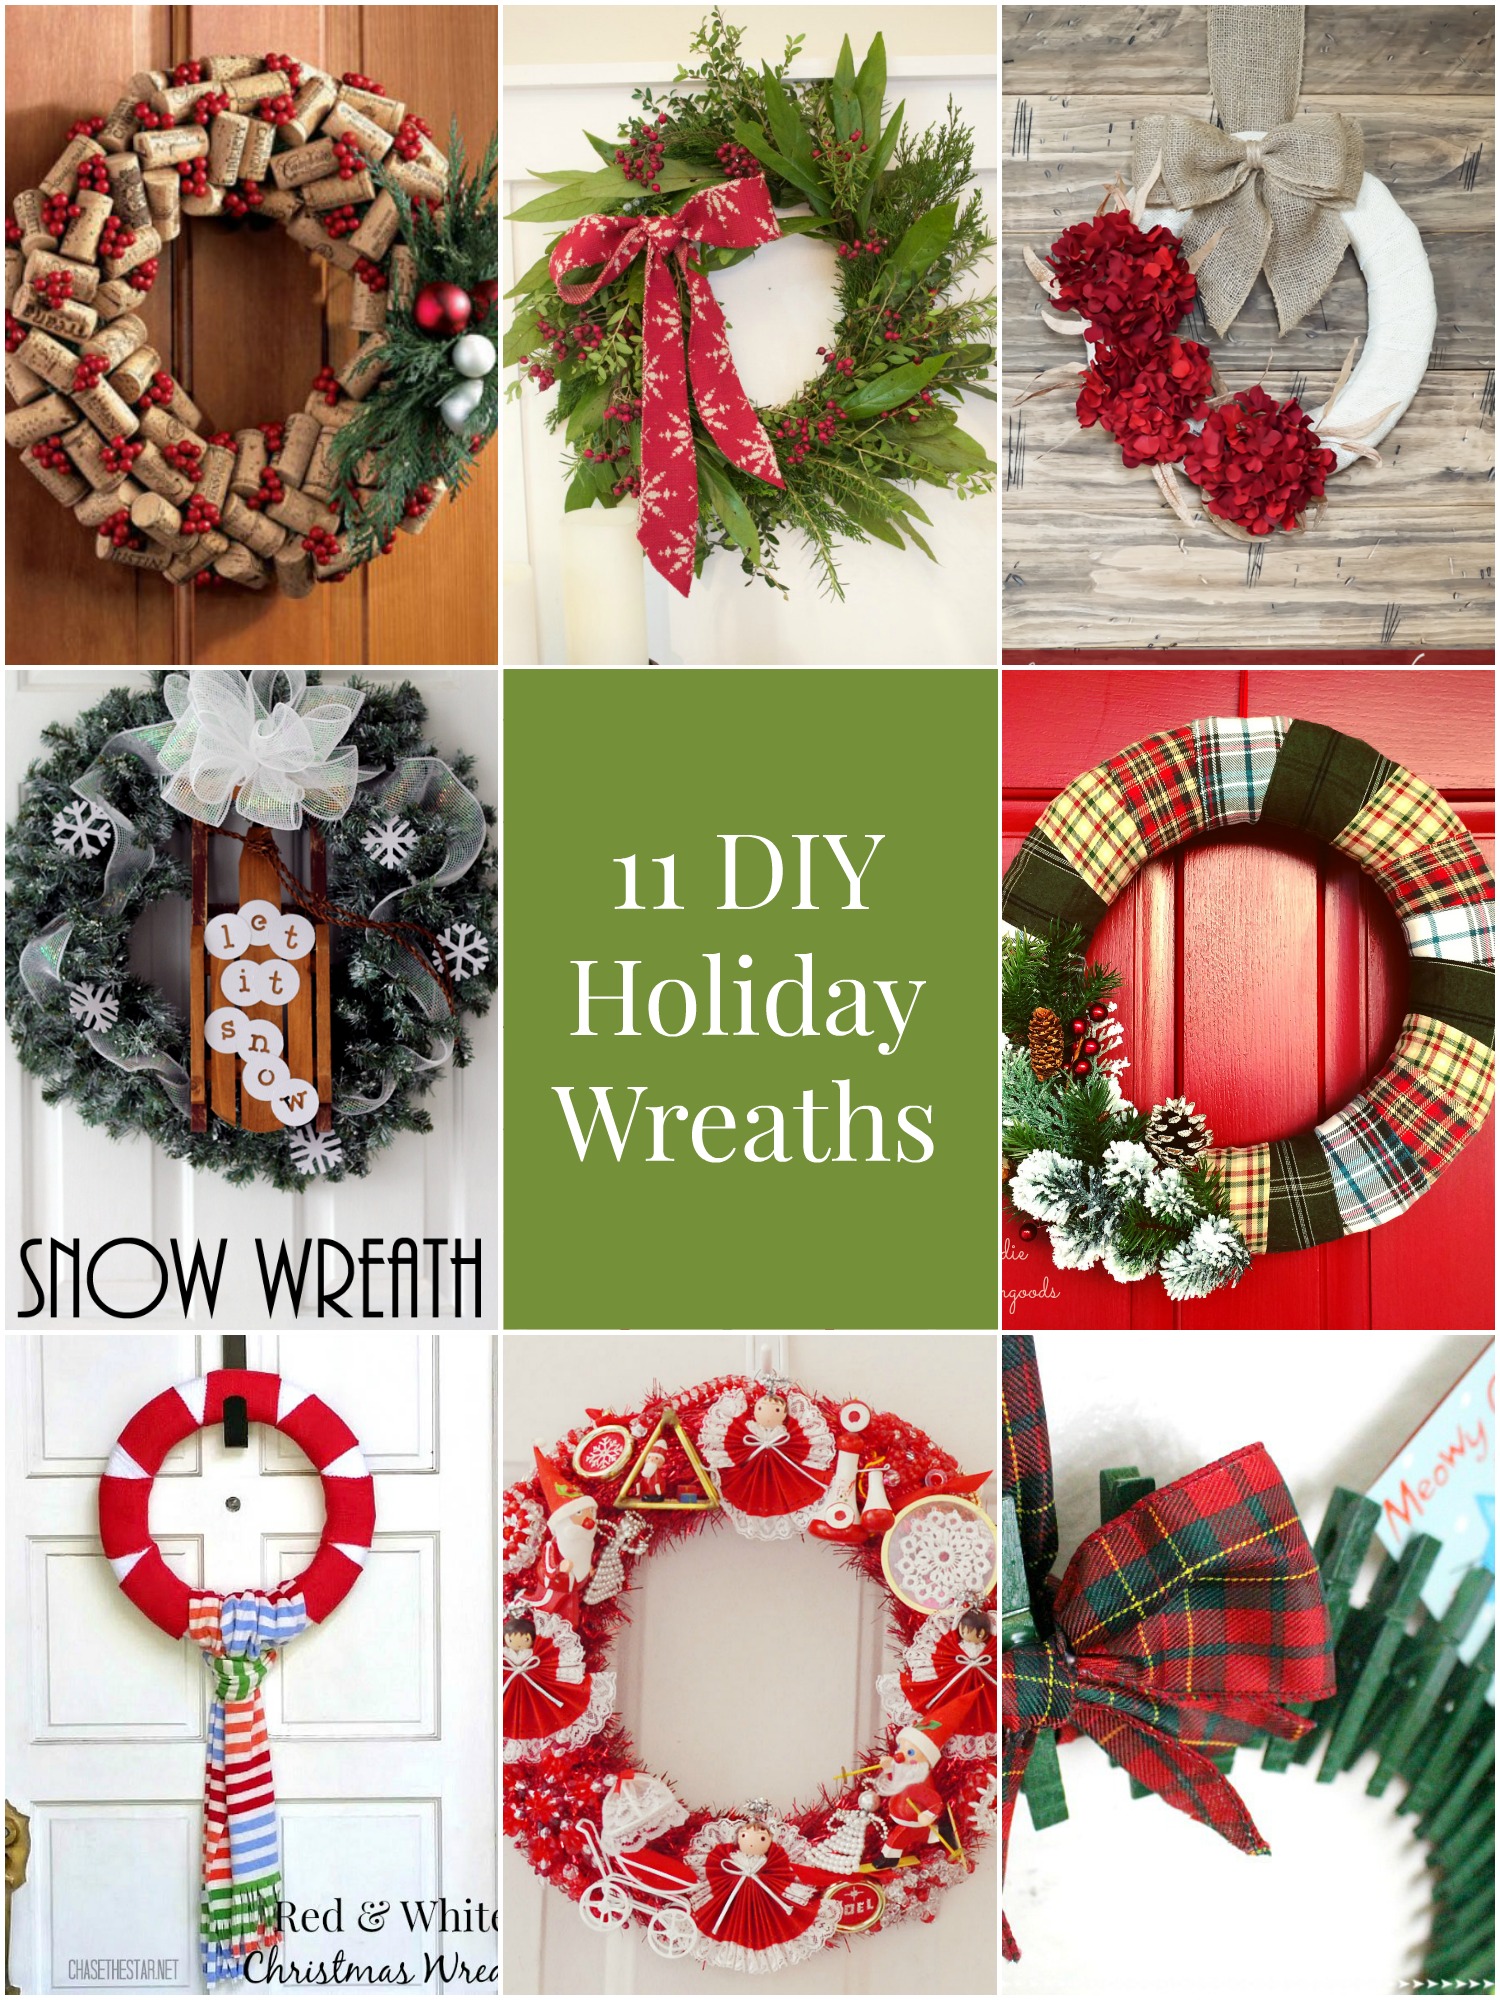 So Creative! - 11 DIY Holiday Wreaths